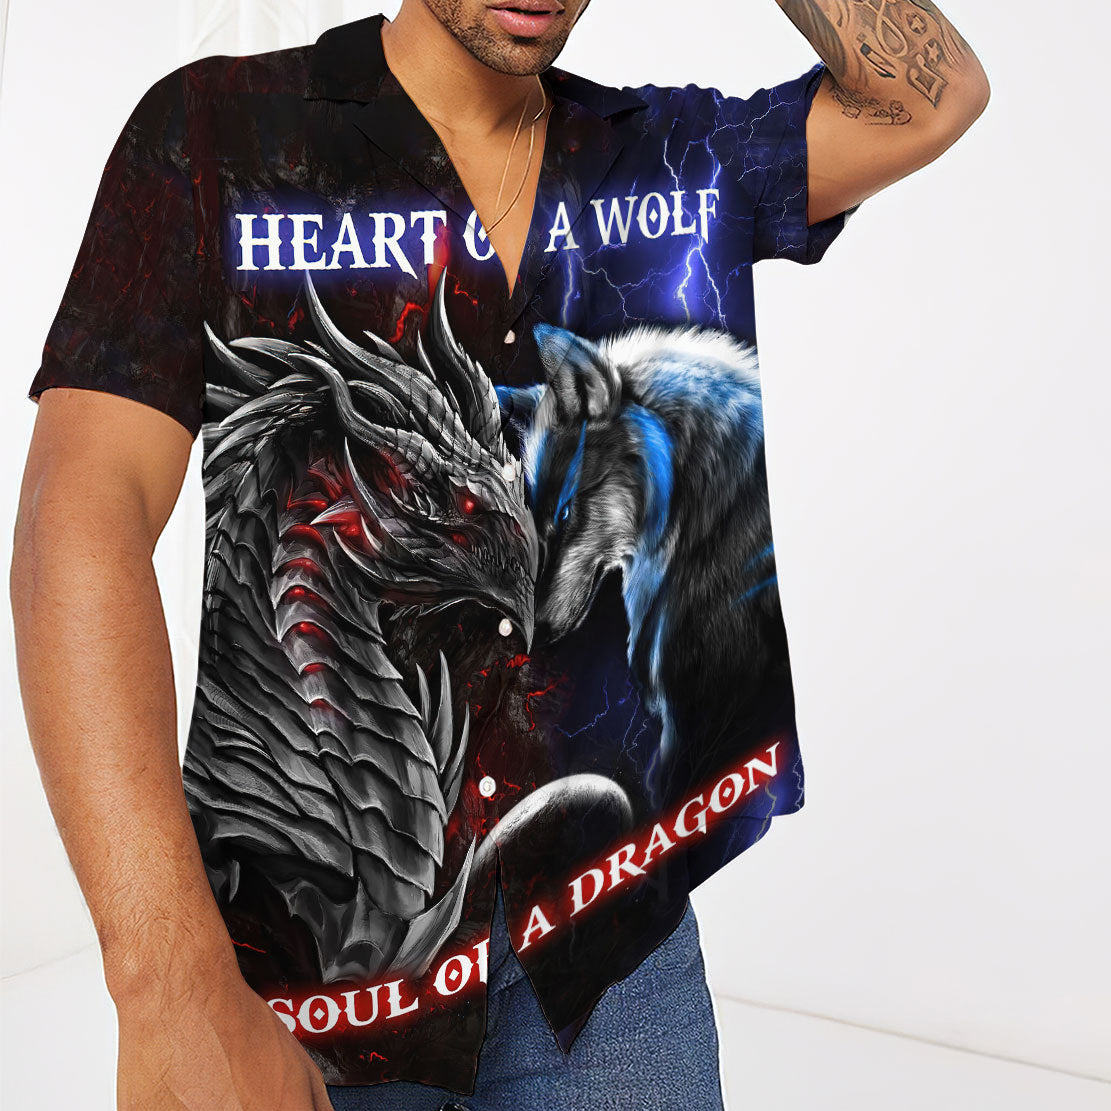 Dragon Heart Of A Wolf, Soul Of A Dragon Hawaii Shirt 5